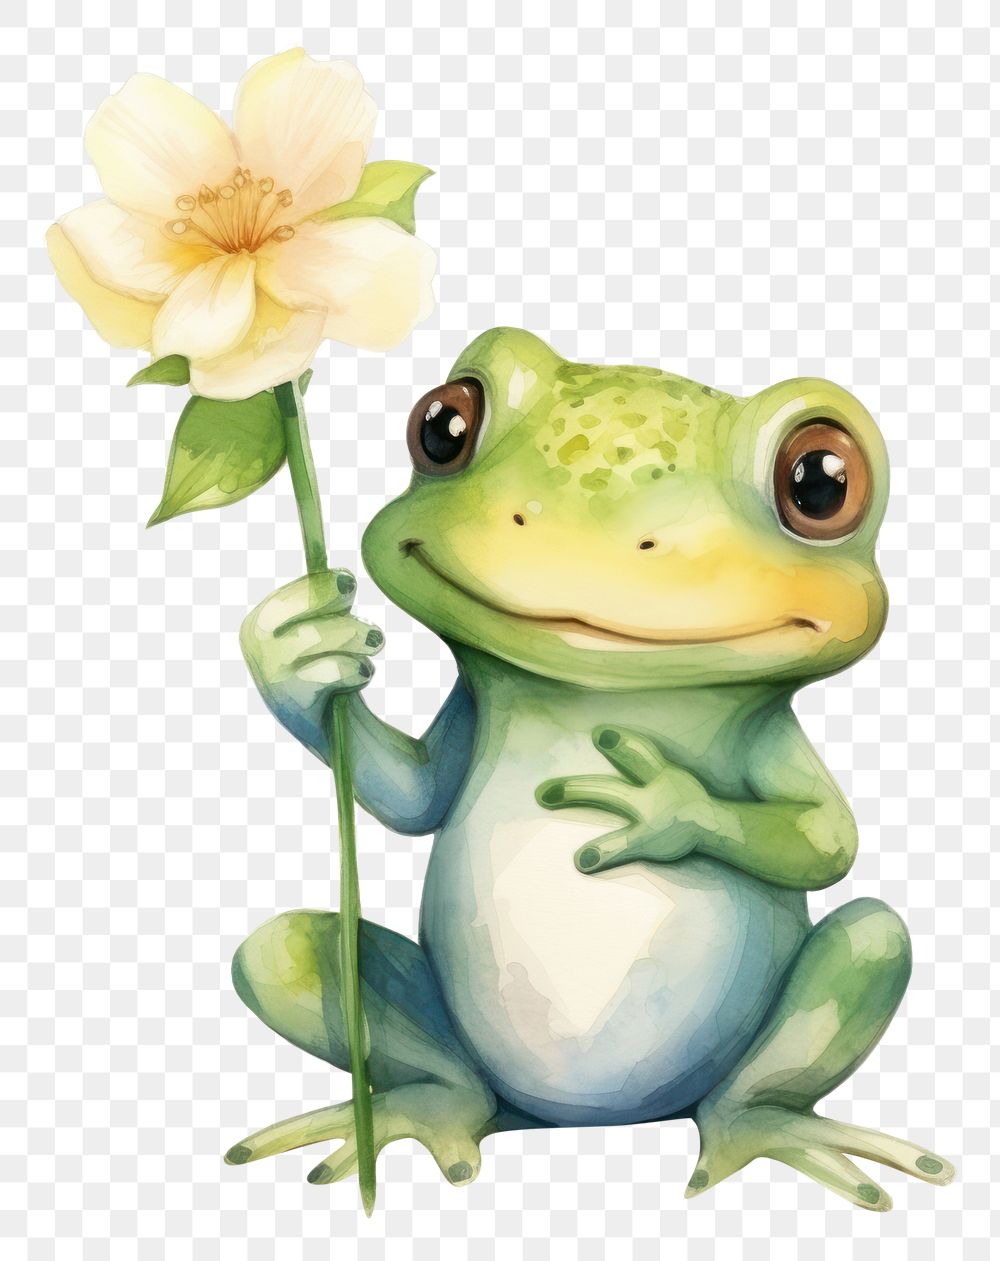 Amphibian nature frog representation